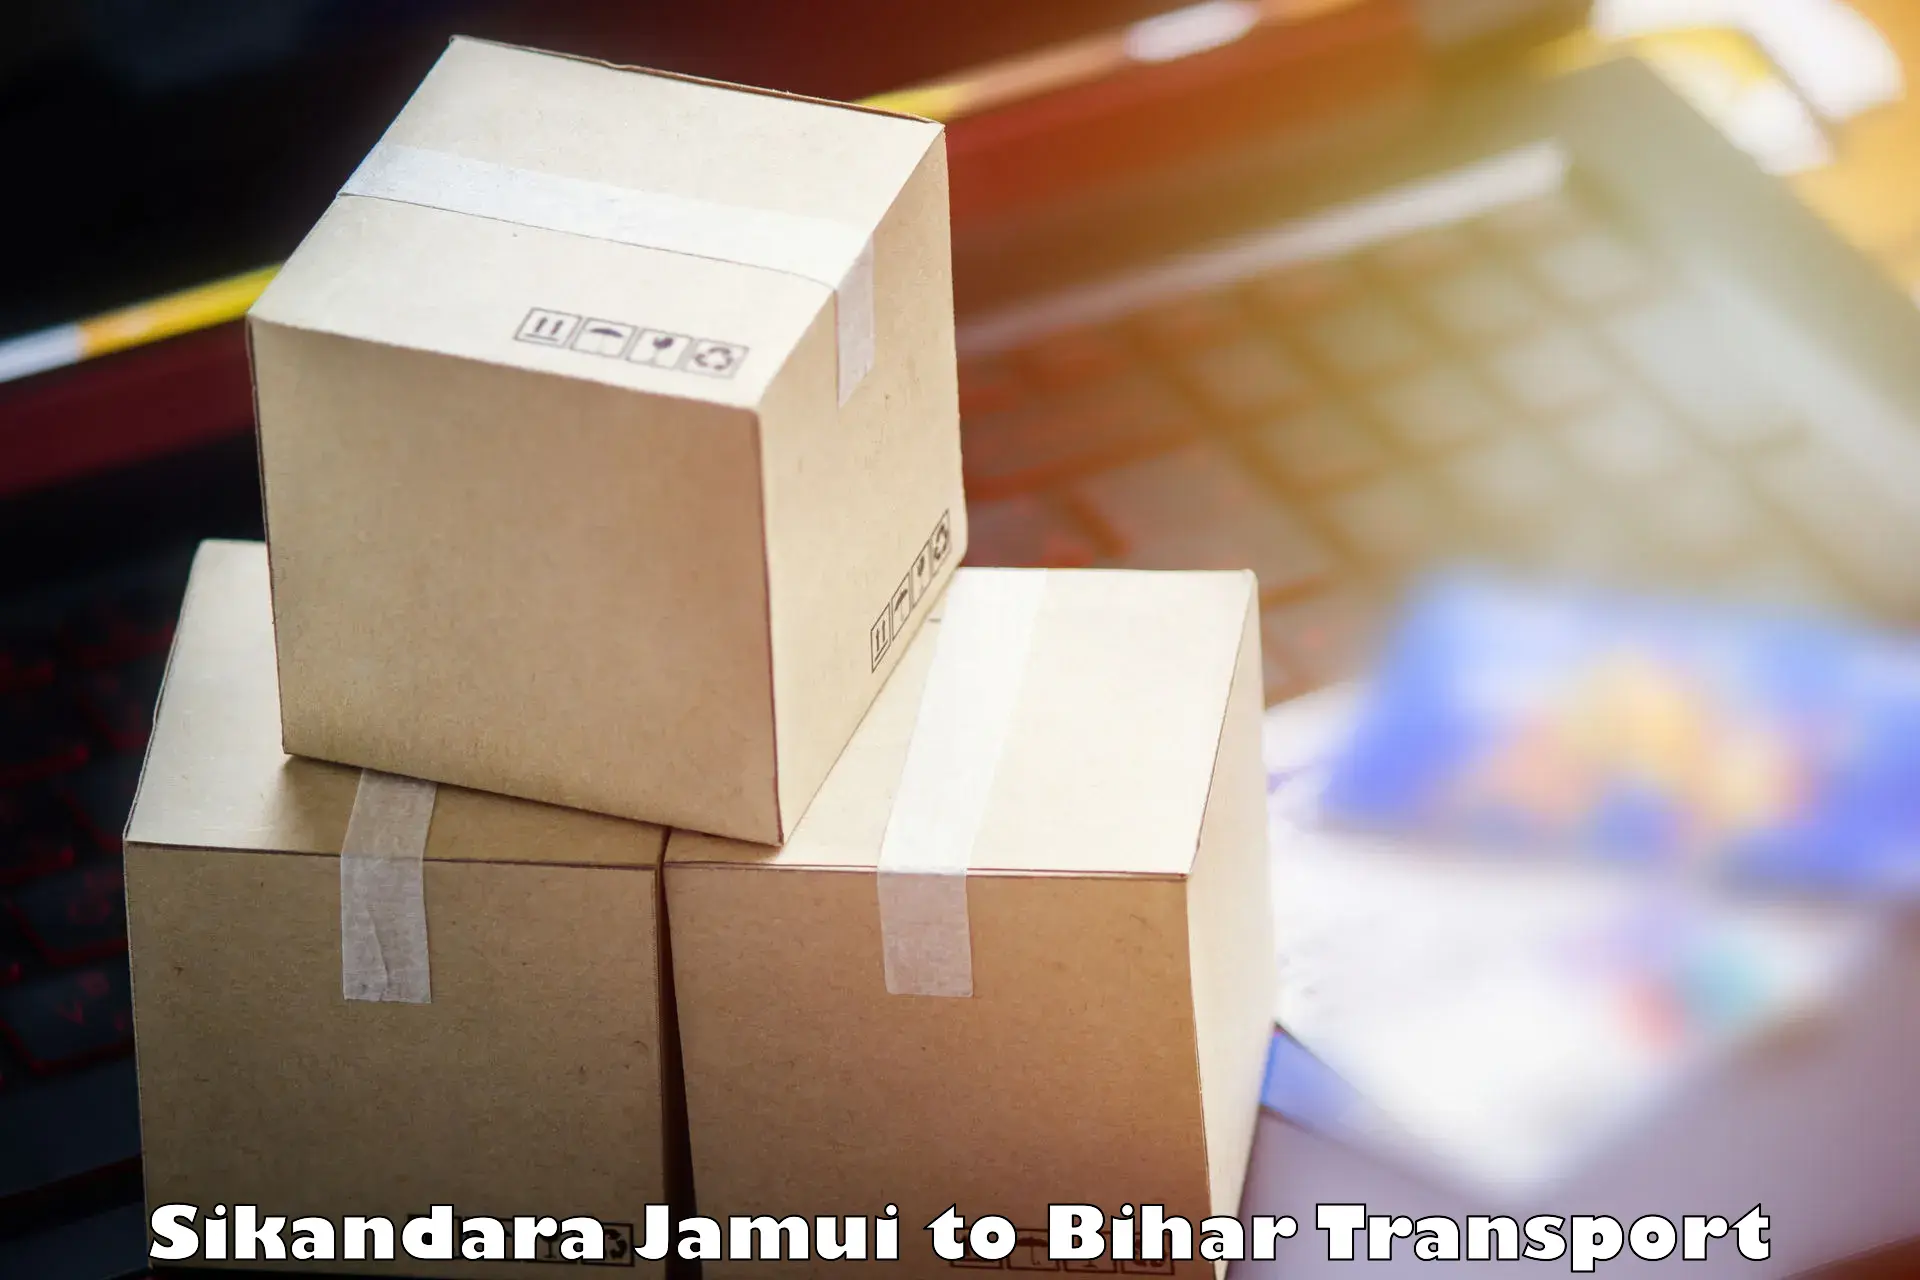 Shipping partner Sikandara Jamui to Minapur